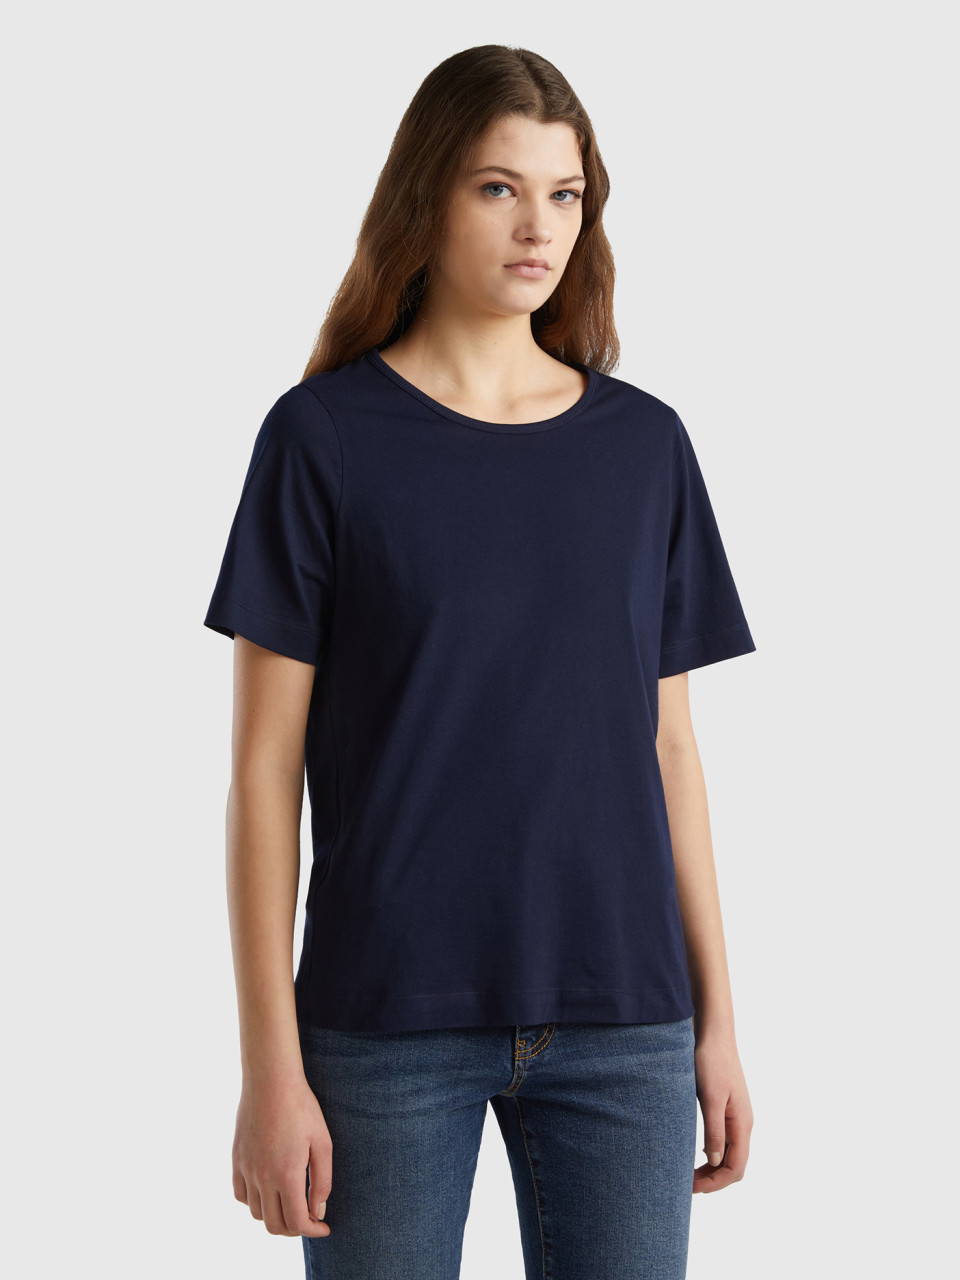 Benetton, Dark Blue Short Sleeve T-shirt, Dark Blue, Women